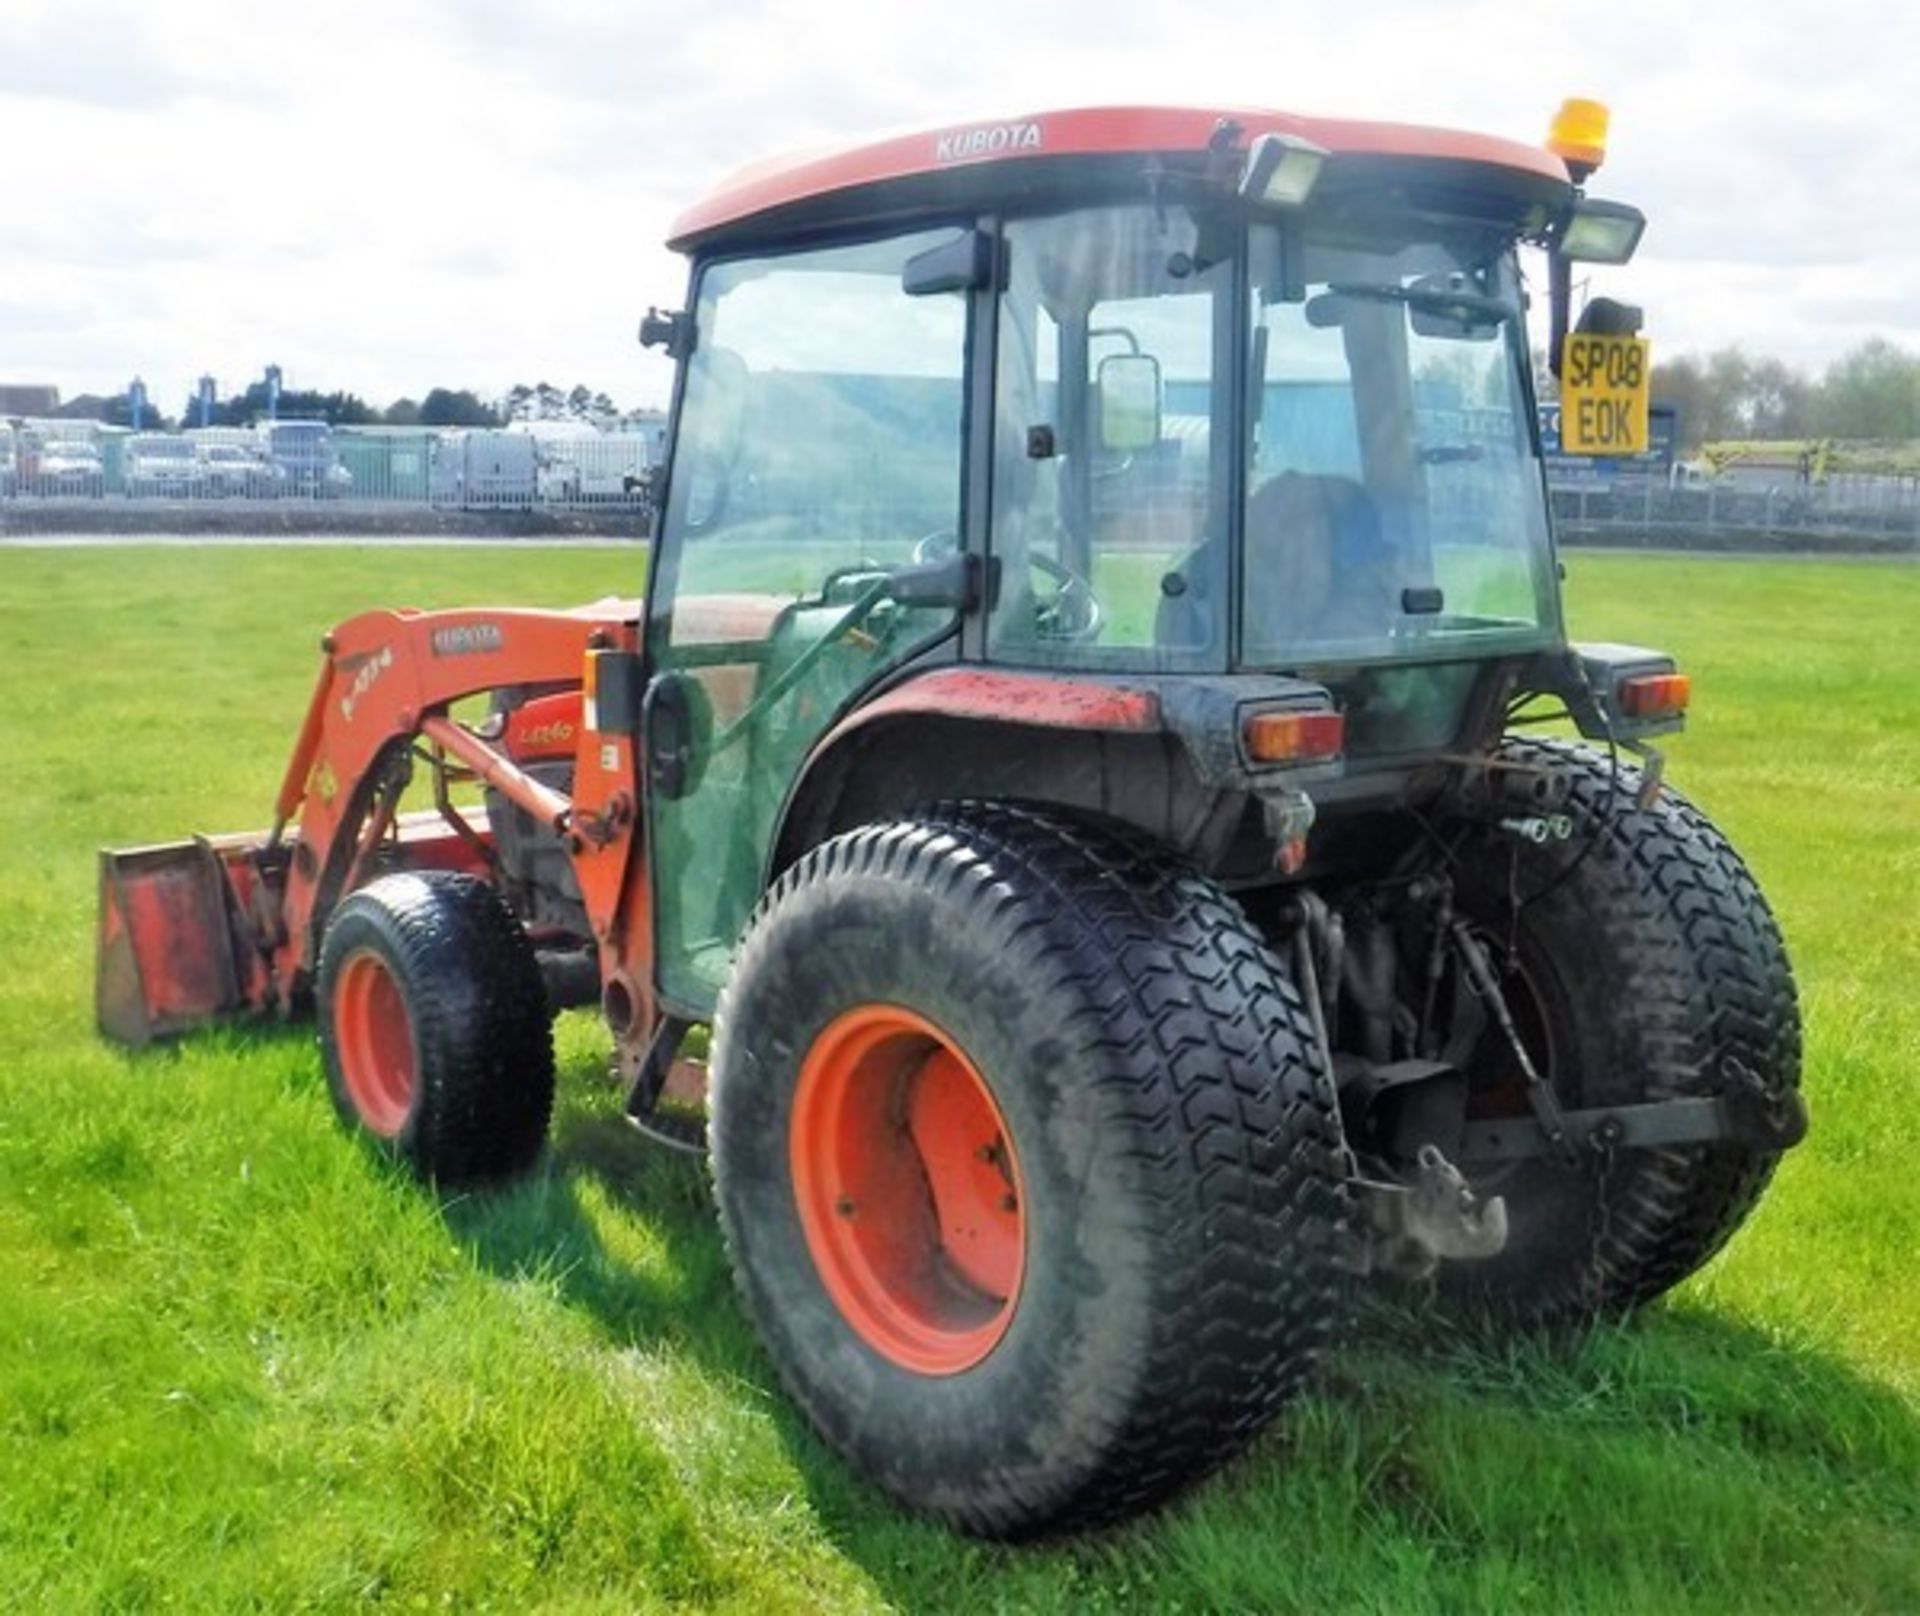 KUBOTA L4240 tractor c/w loader model LA714. Reg No SP08 EOK, s/n 3029671535. 3285 hrs (not verified - Image 15 of 17